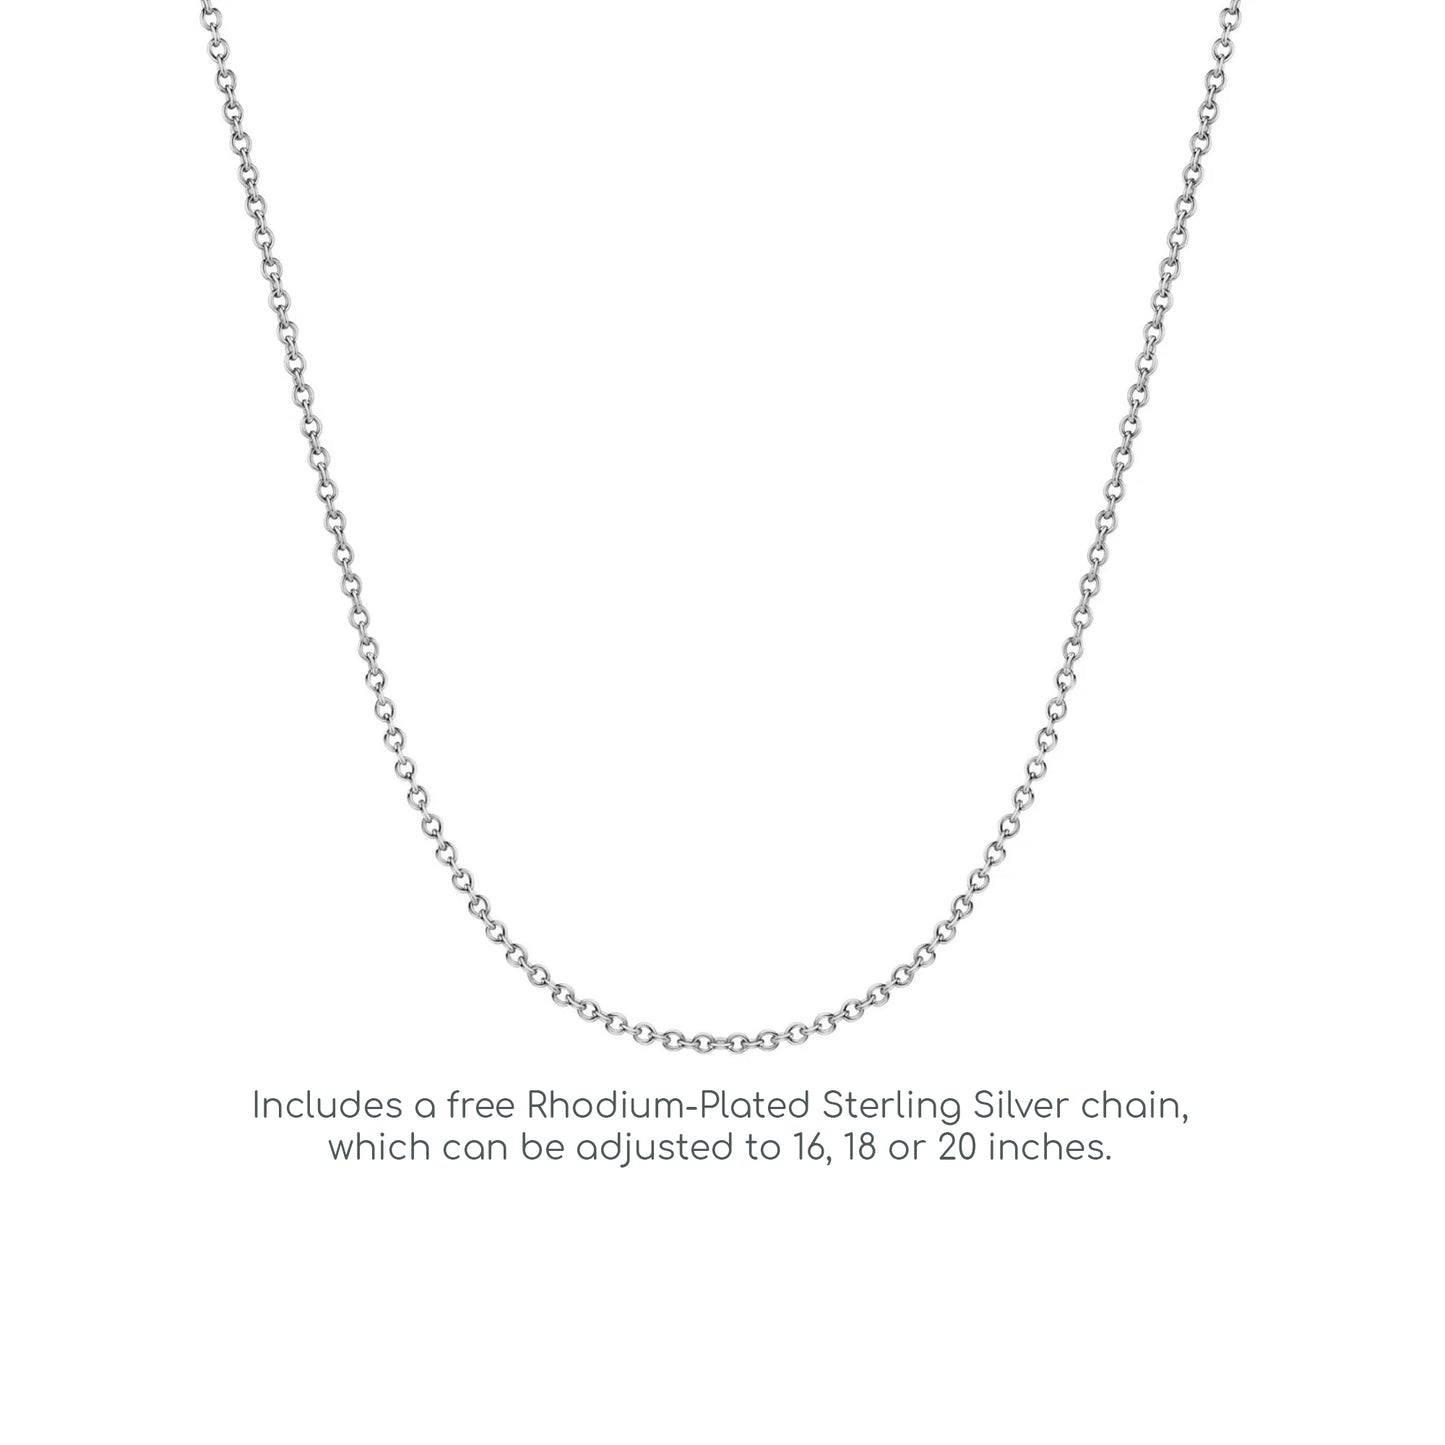 Silver  CZ Sun Rays Cross Pendant Necklace 18 inch - GVX045